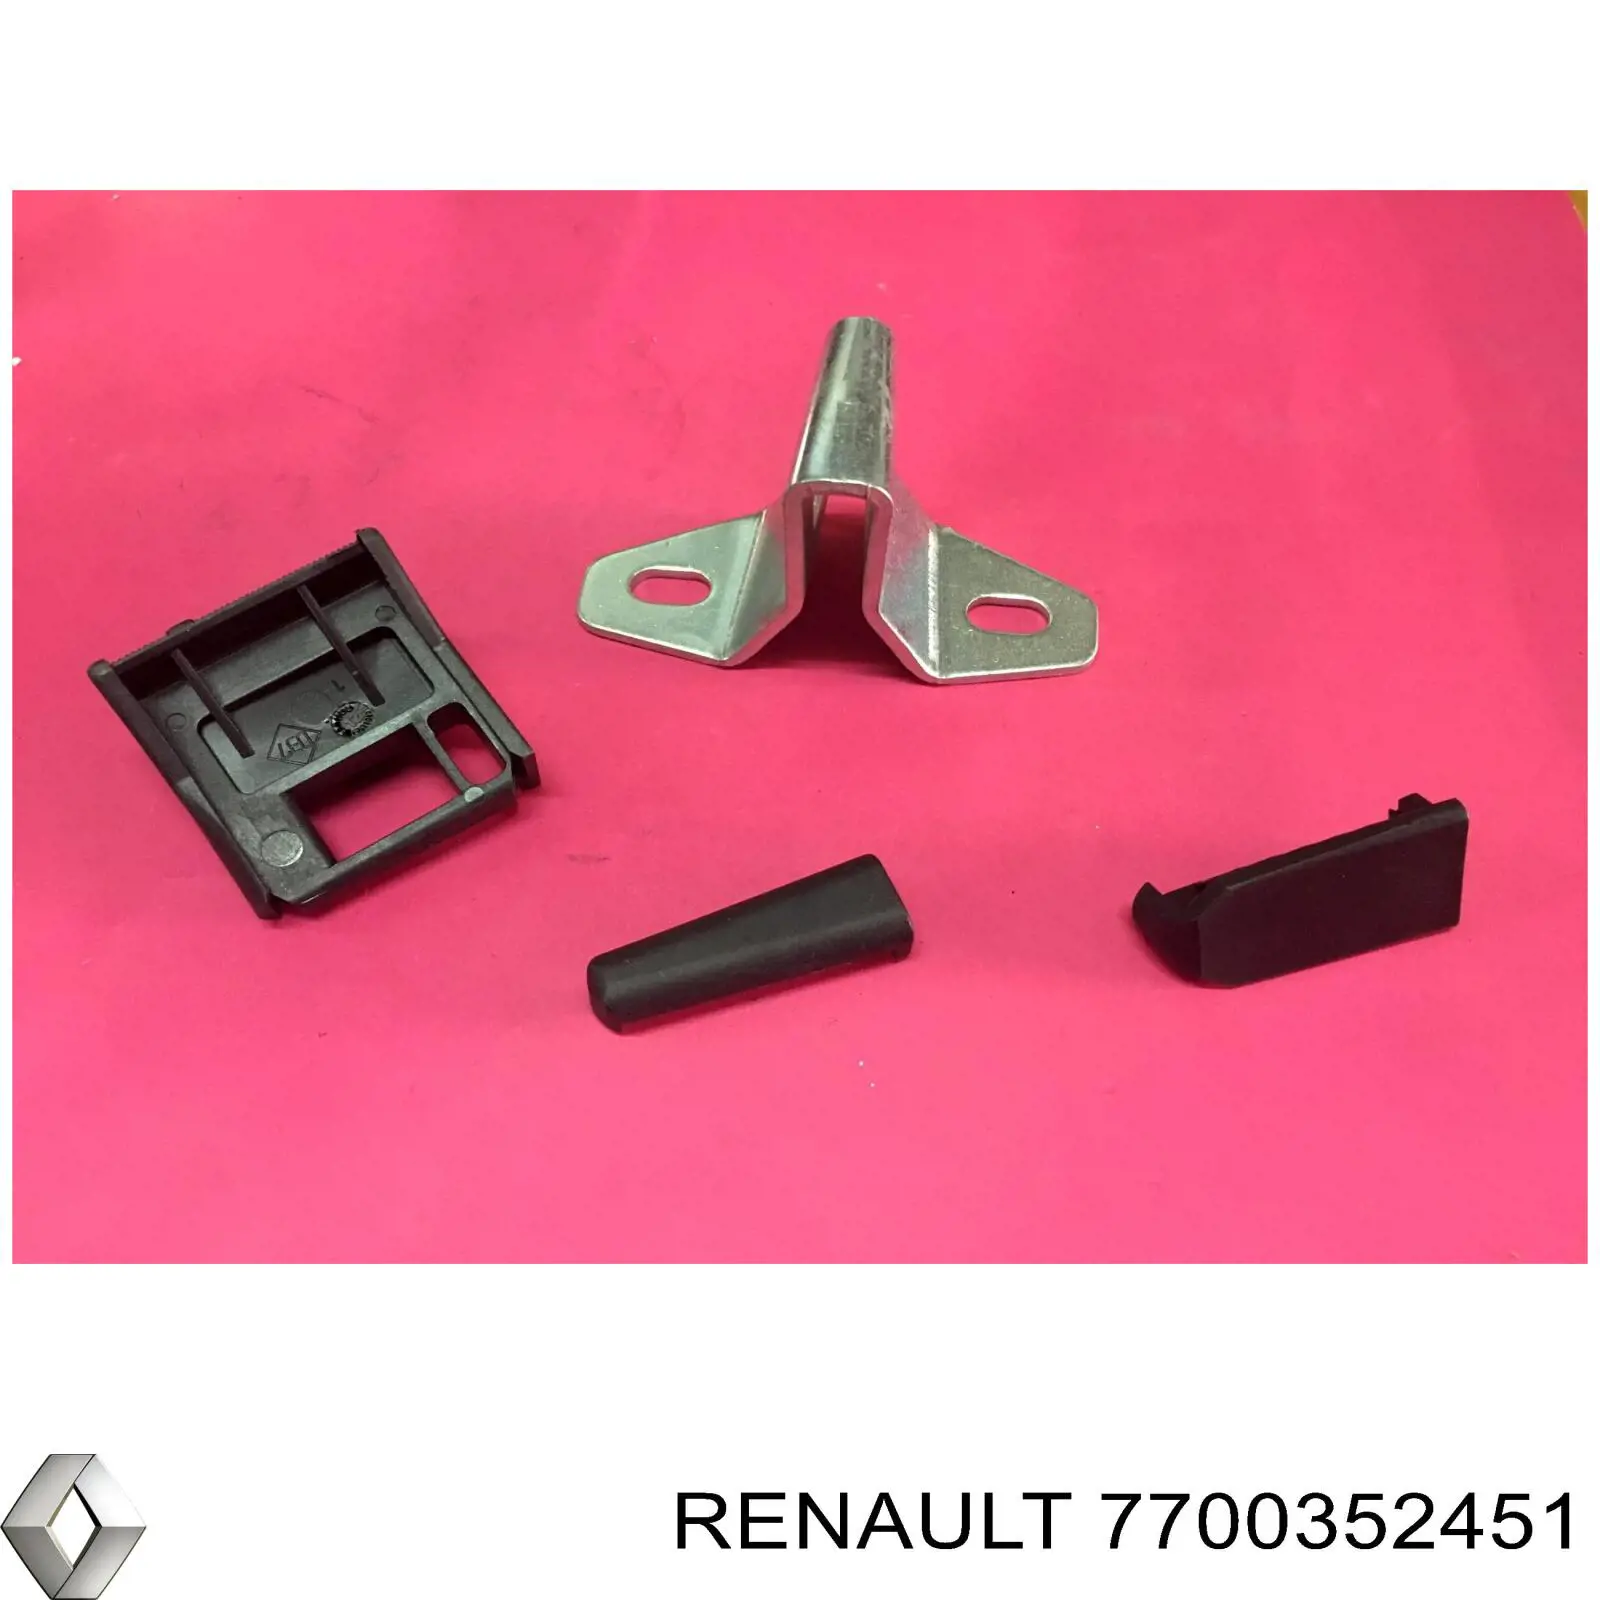 7700352451 Renault (RVI) gozno de garra (parte complementar esquerdo inferior de fecho da porta traseira batente)